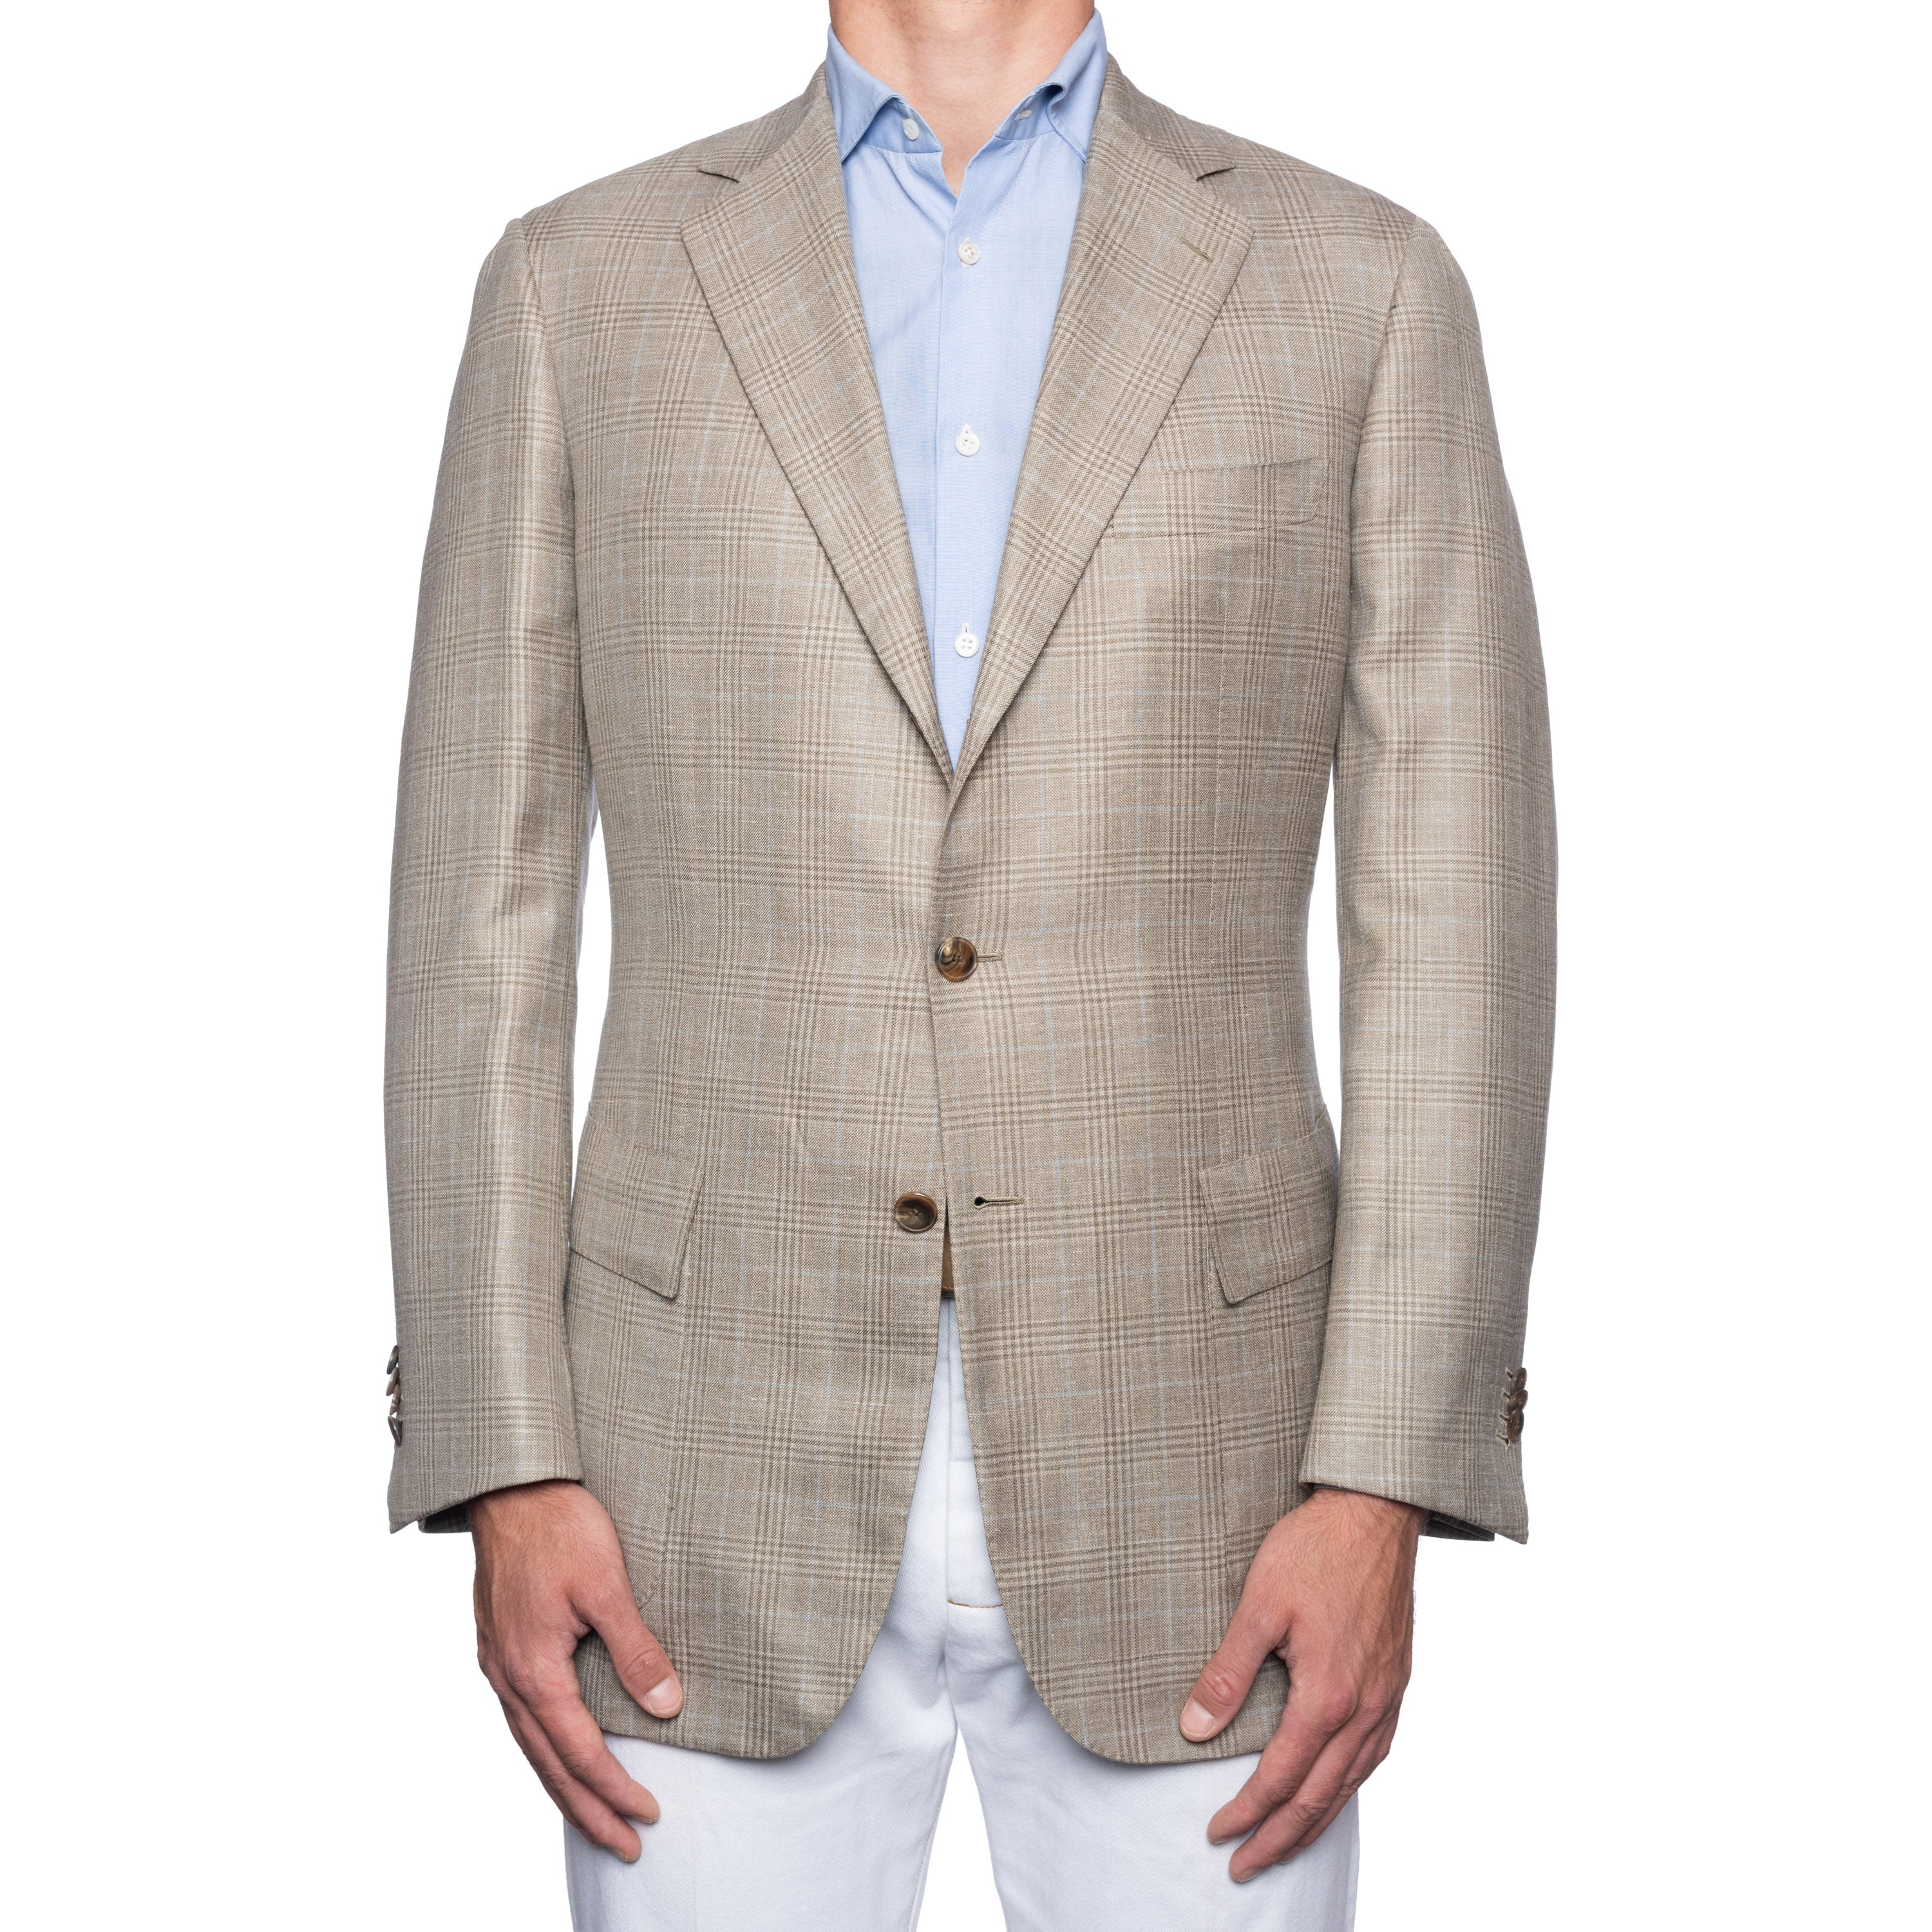 SARTORIA CASTANGIA Gray Plaid Wool-Silk-Linen Sport Coat Jacket EU 54 NEW US 44 CASTANGIA